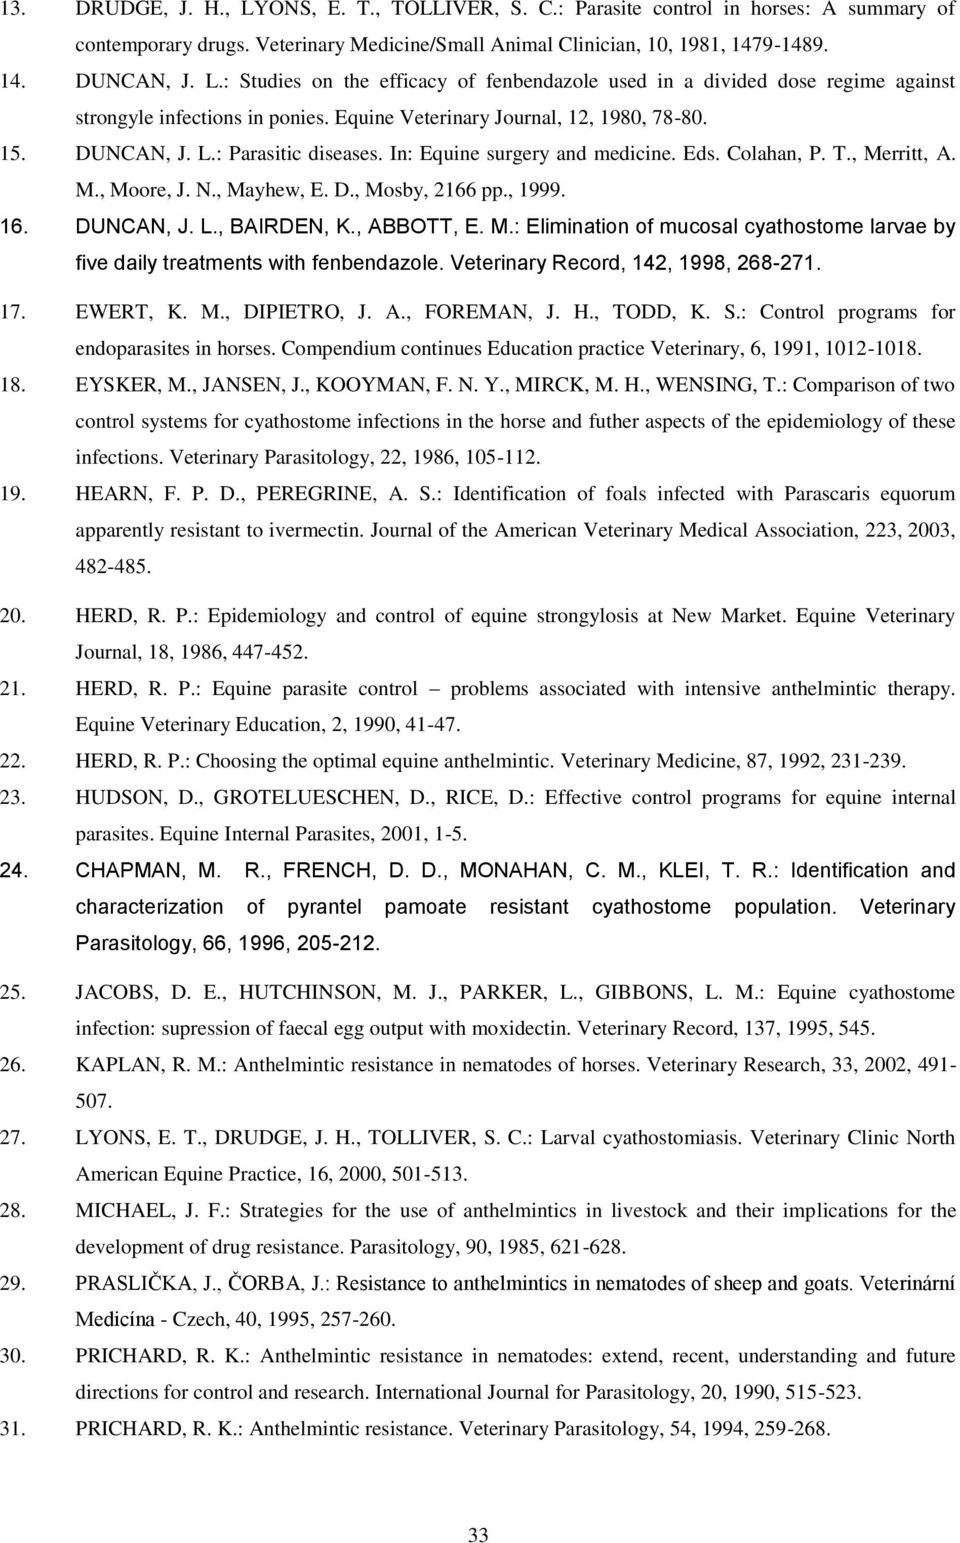 , 1999. 16. DUNCAN, J. L., BAIRDEN, K., ABBOTT, E. M.: Elimination of mucosal cyathostome larvae by five daily treatments with fenbendazole. Veterinary Record, 142, 1998, 268-271. 17. EWERT, K. M., DIPIETRO, J.